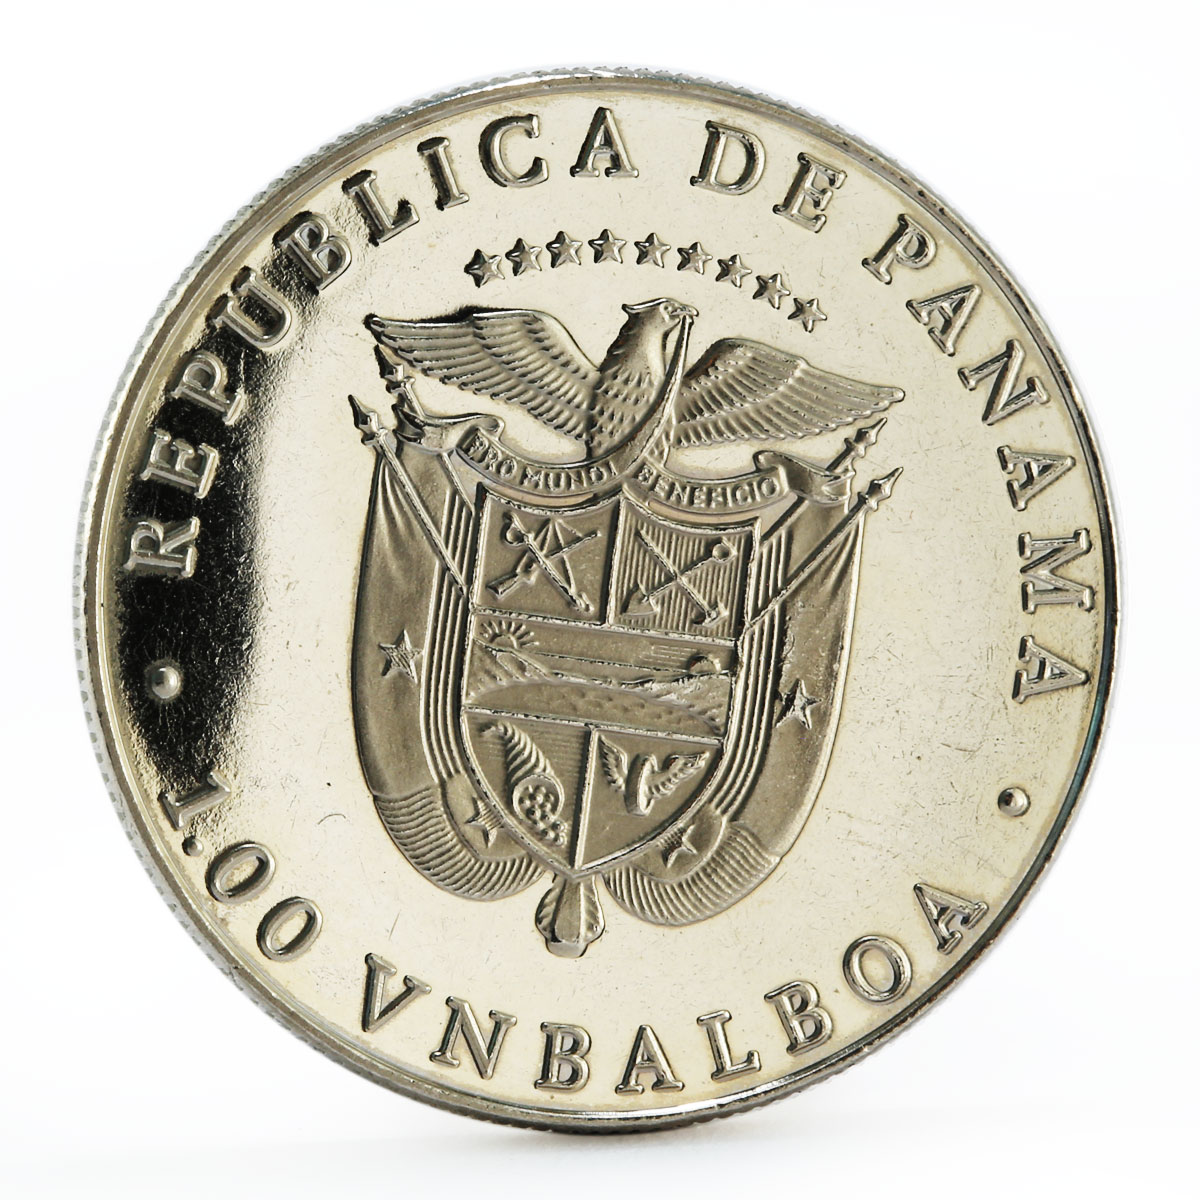 Panama 1 balboa Seoul Olympic Summer Games series Equestrian silver coin 1988